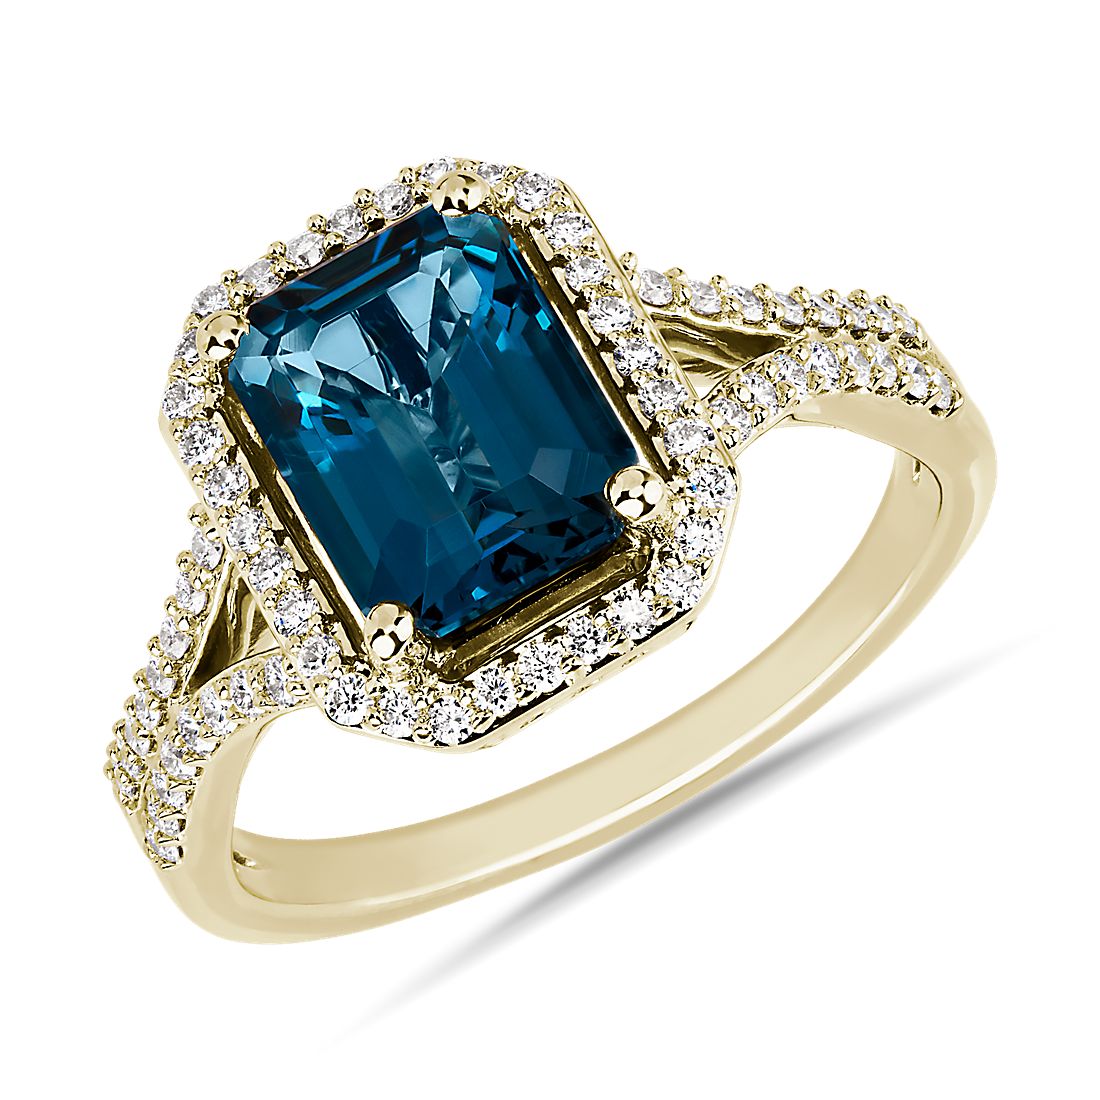 14k Yellow Gold/Sterling Silver 7x5mm Emerald Cut Genuine London Blue Topaz Ring 